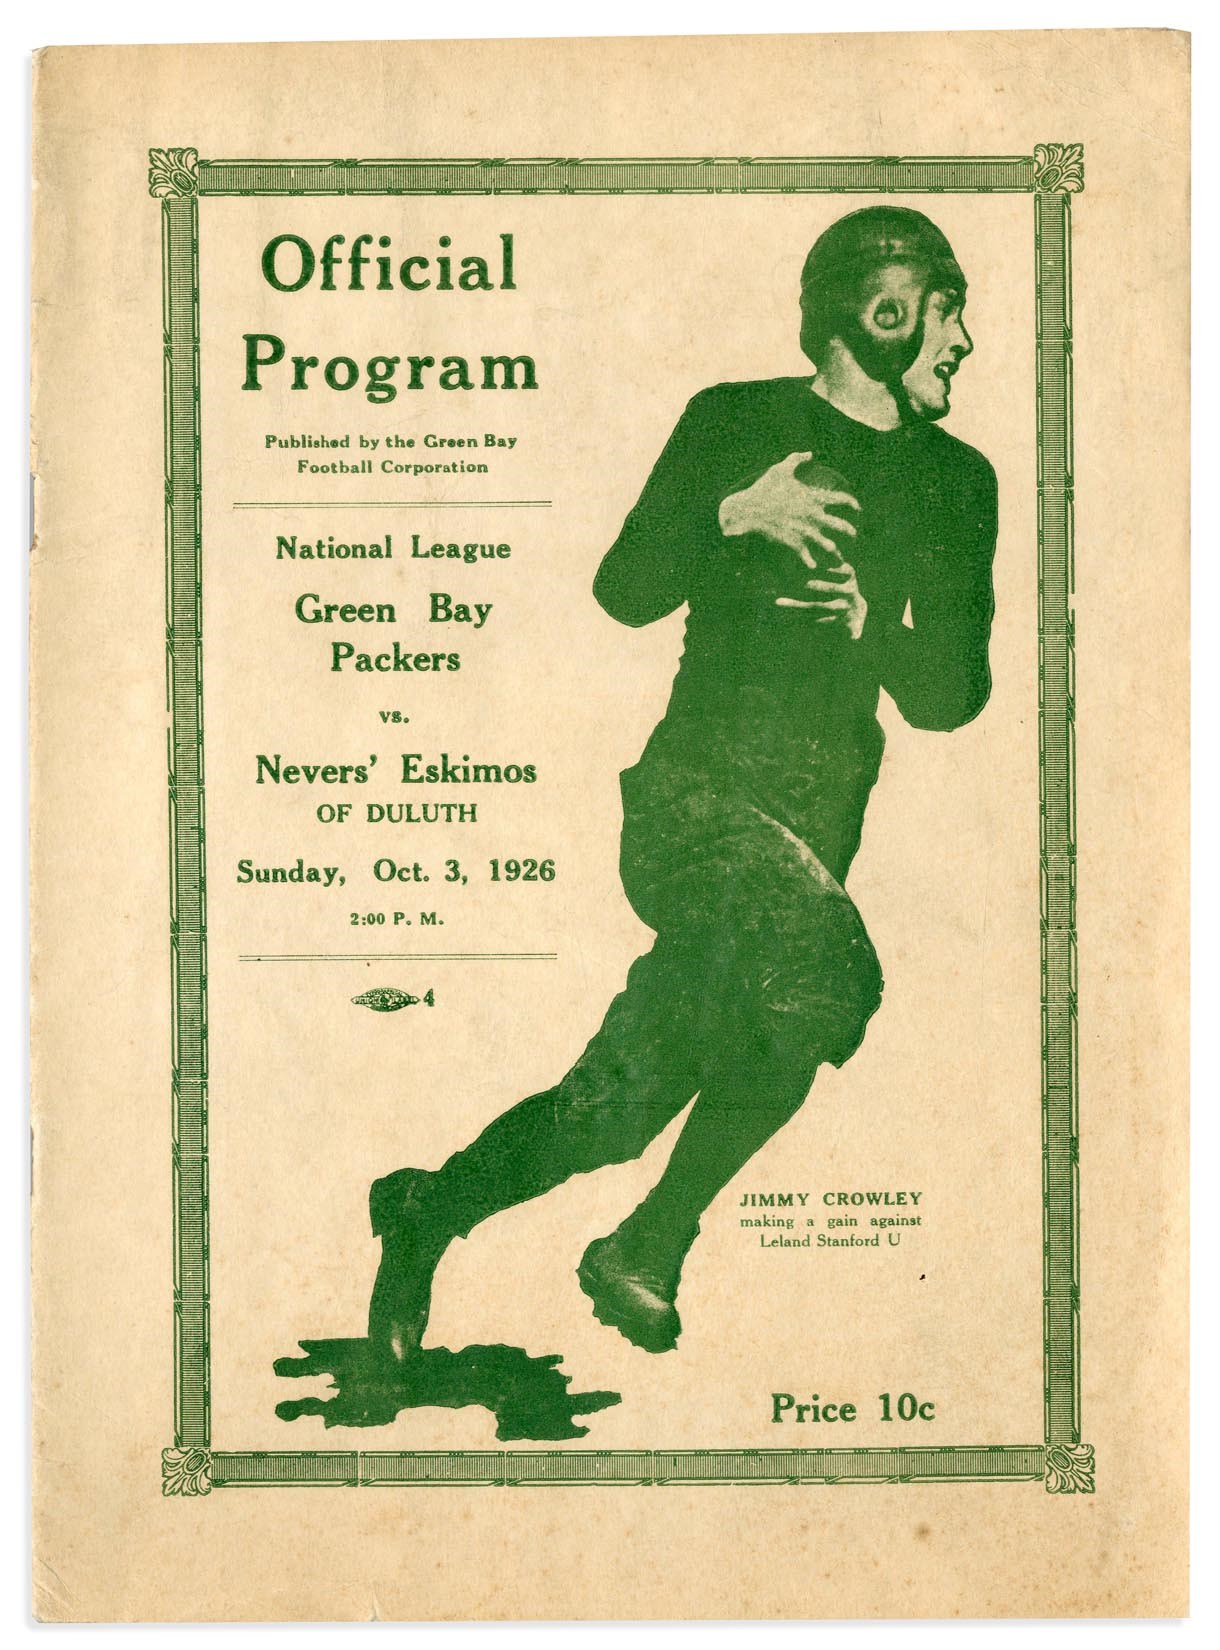 Football - 1926 Green Bay Packers vs. Duluth Eskimos 0-0 Tie Game Program